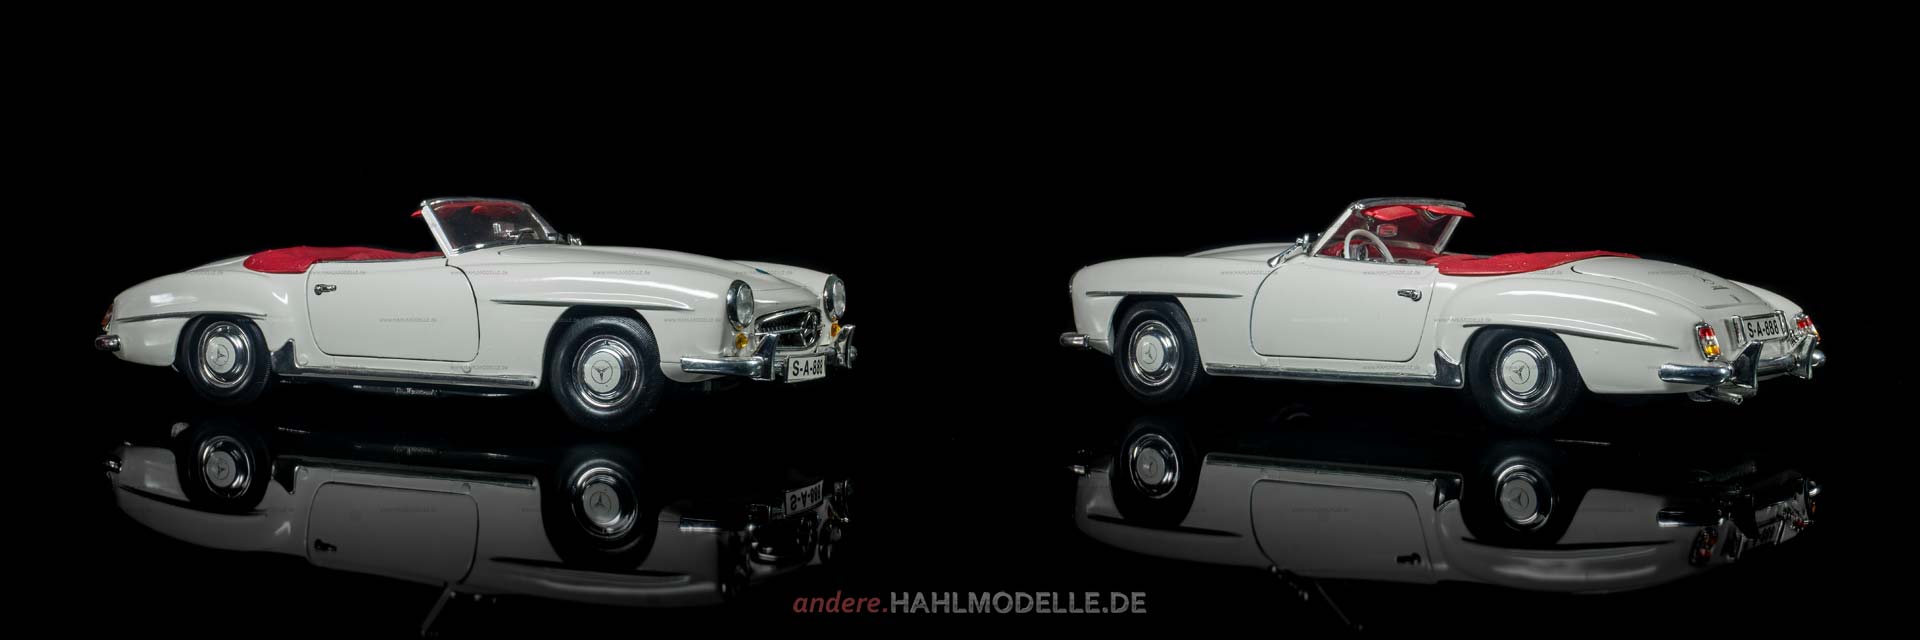 Mercedes-Benz 190 SL (W 121 B II) | Cabriolet | Maisto | www.andere.hahlmodelle.de